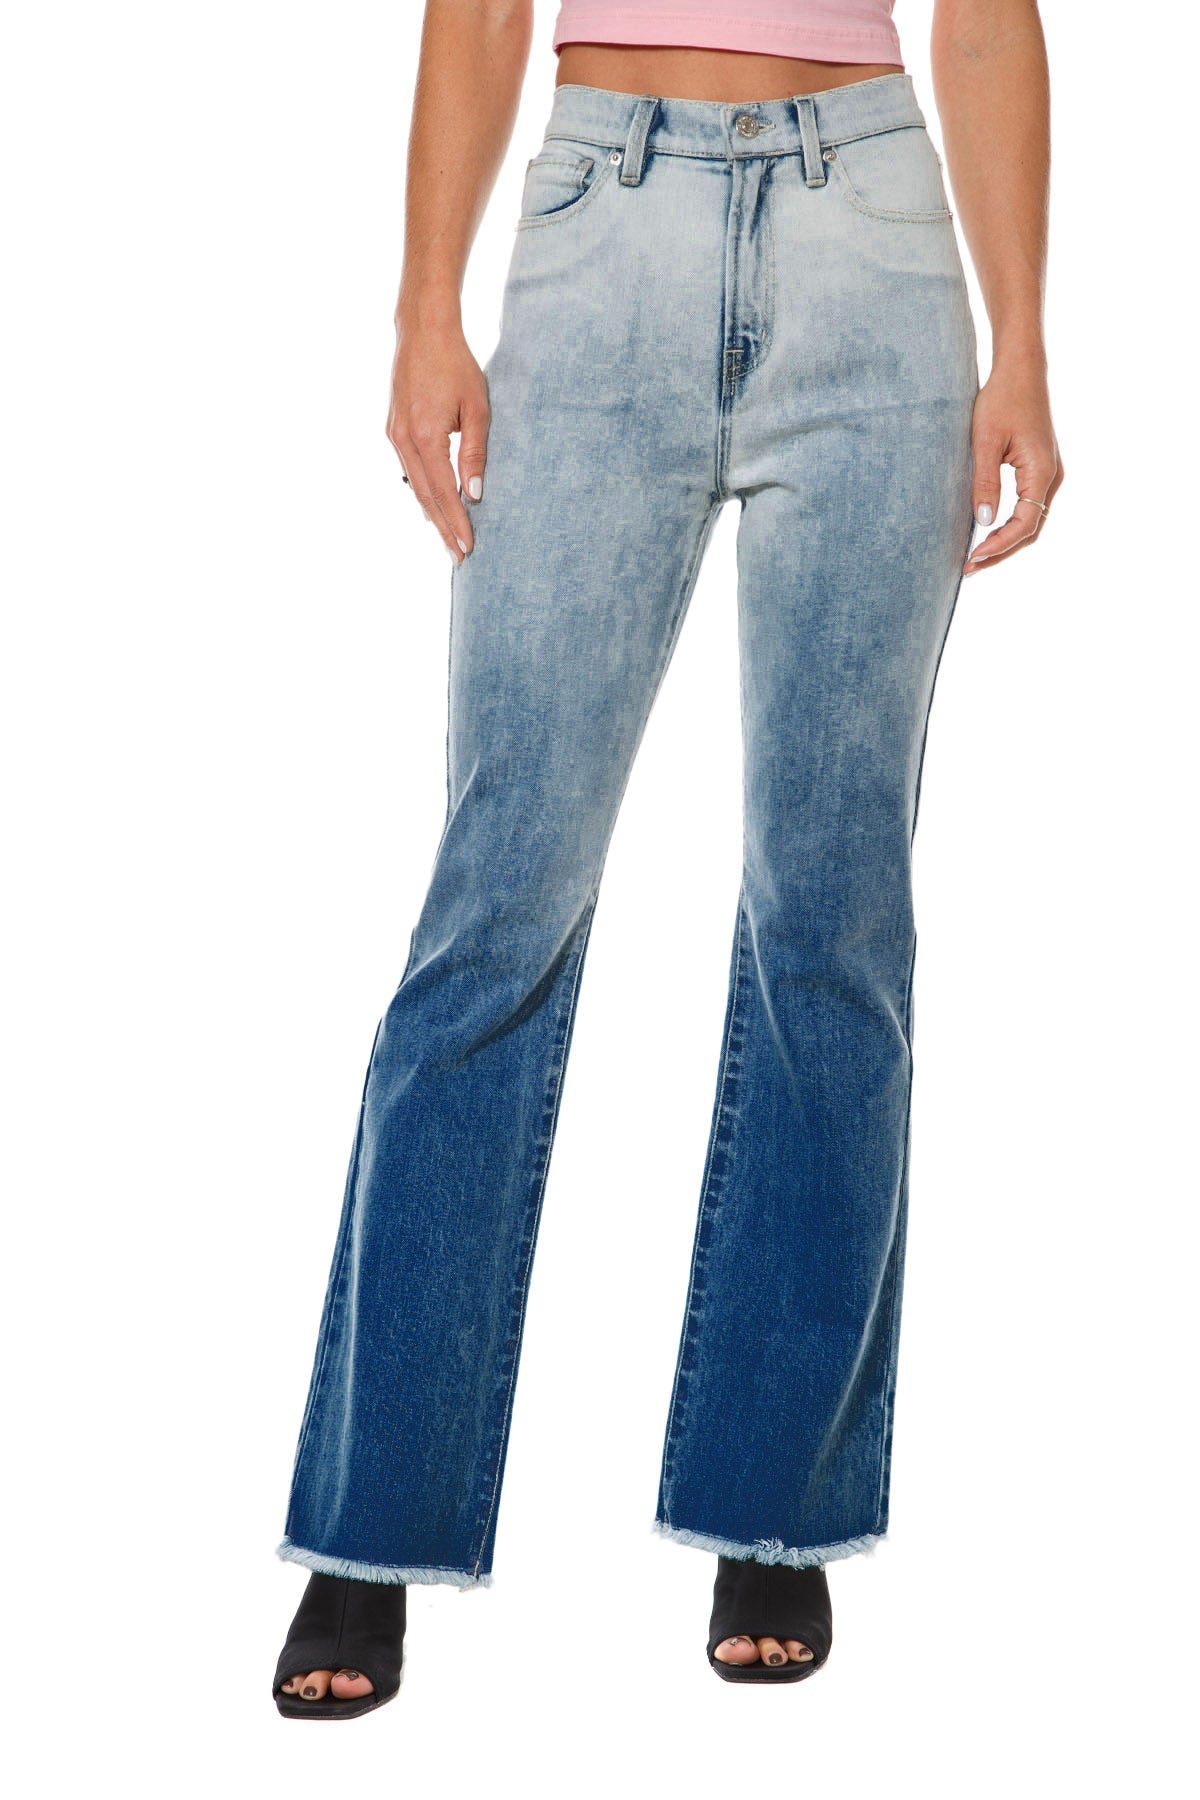 Juicy Couture Malibu Ombre Flare Jeans Bright Blue Ombre